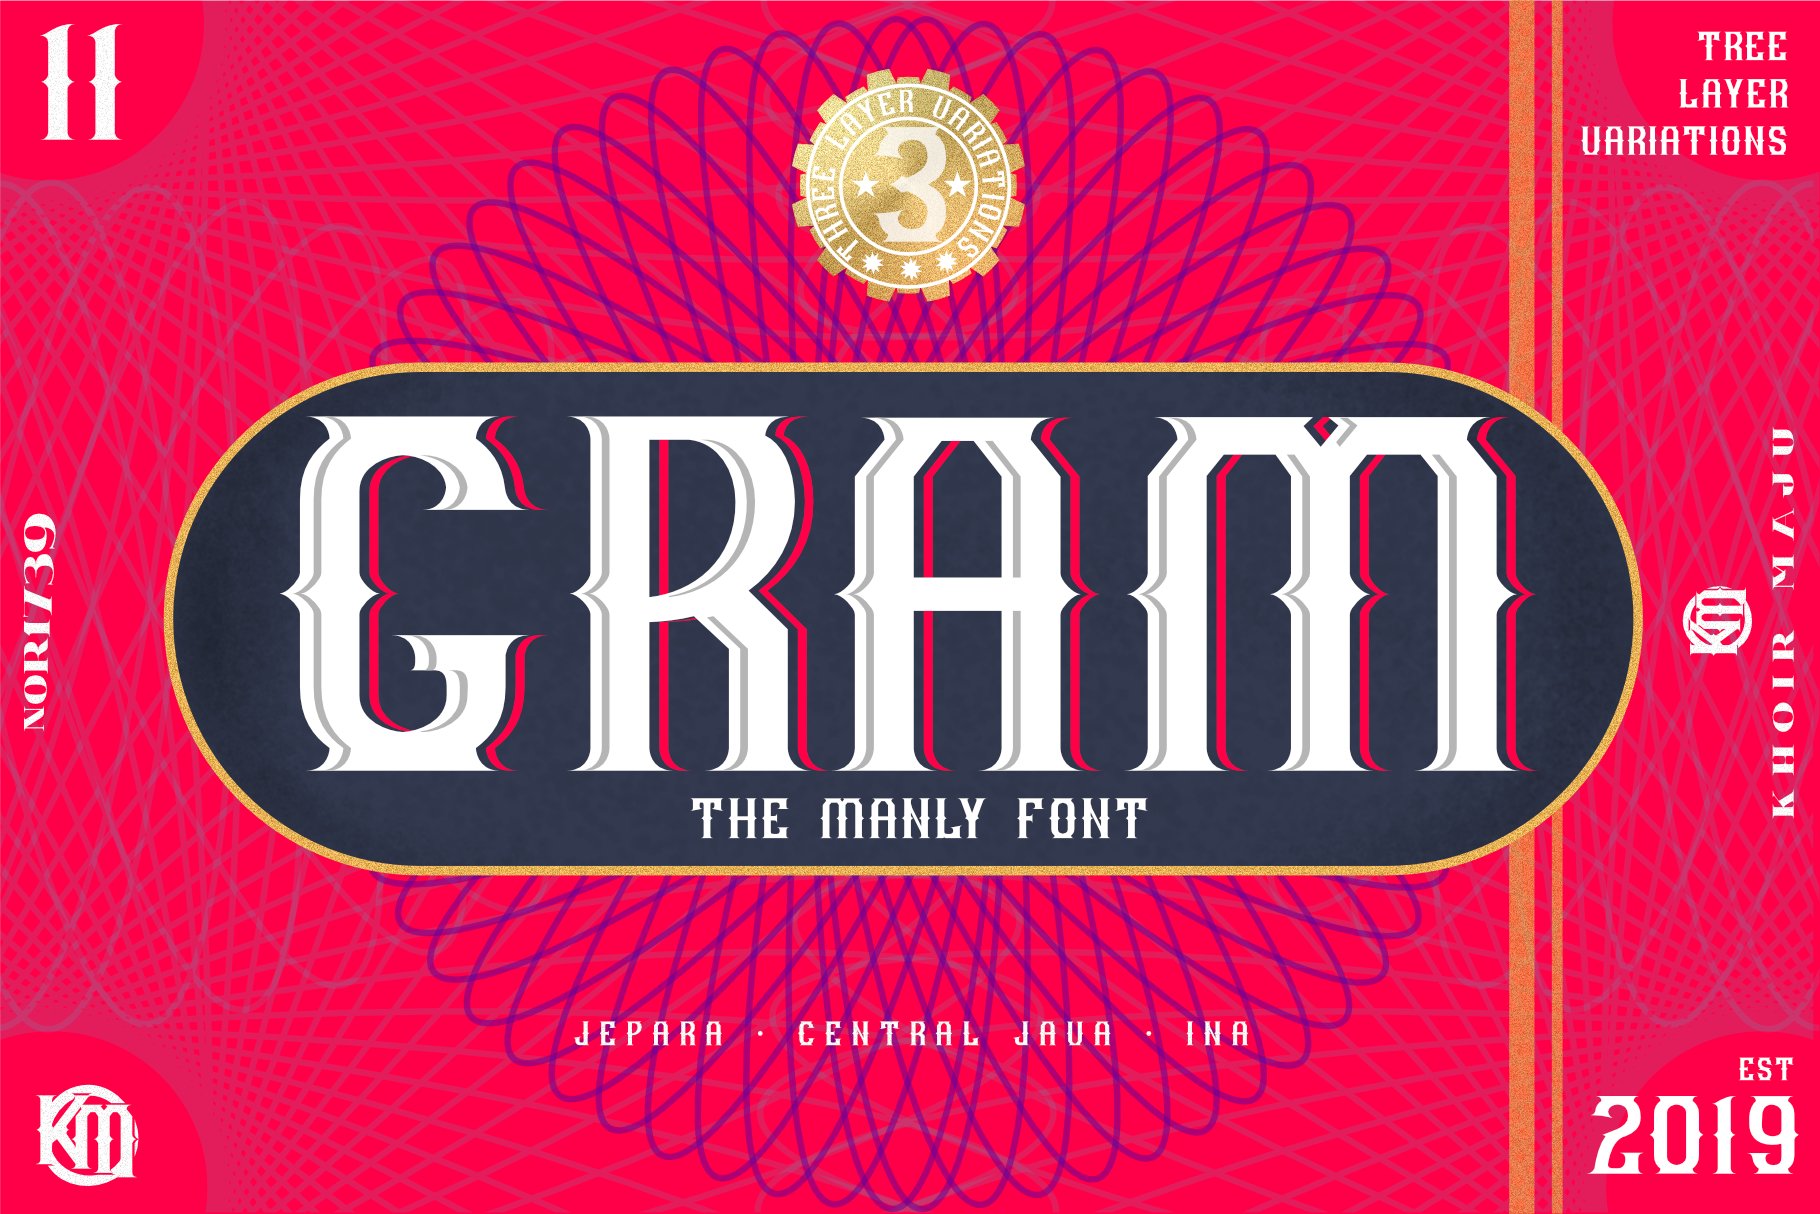 GRAM - New Display Font cover image.